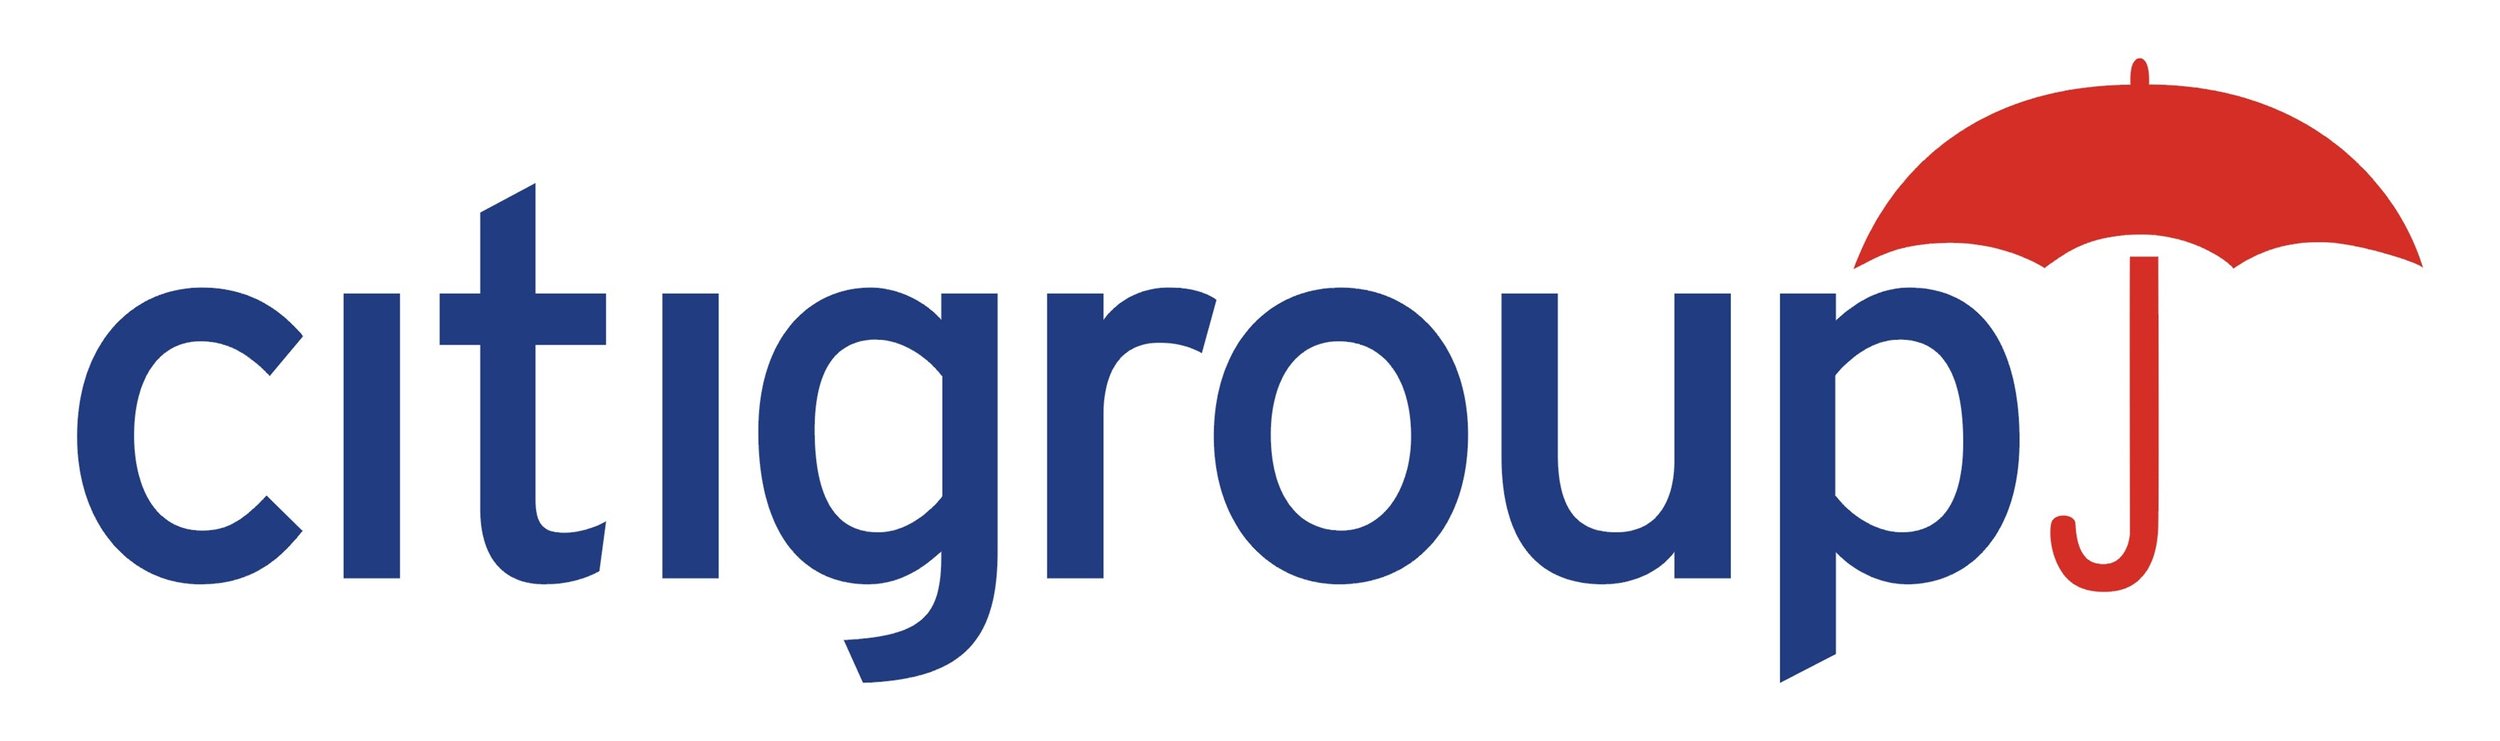 citigroup-logo.jpg